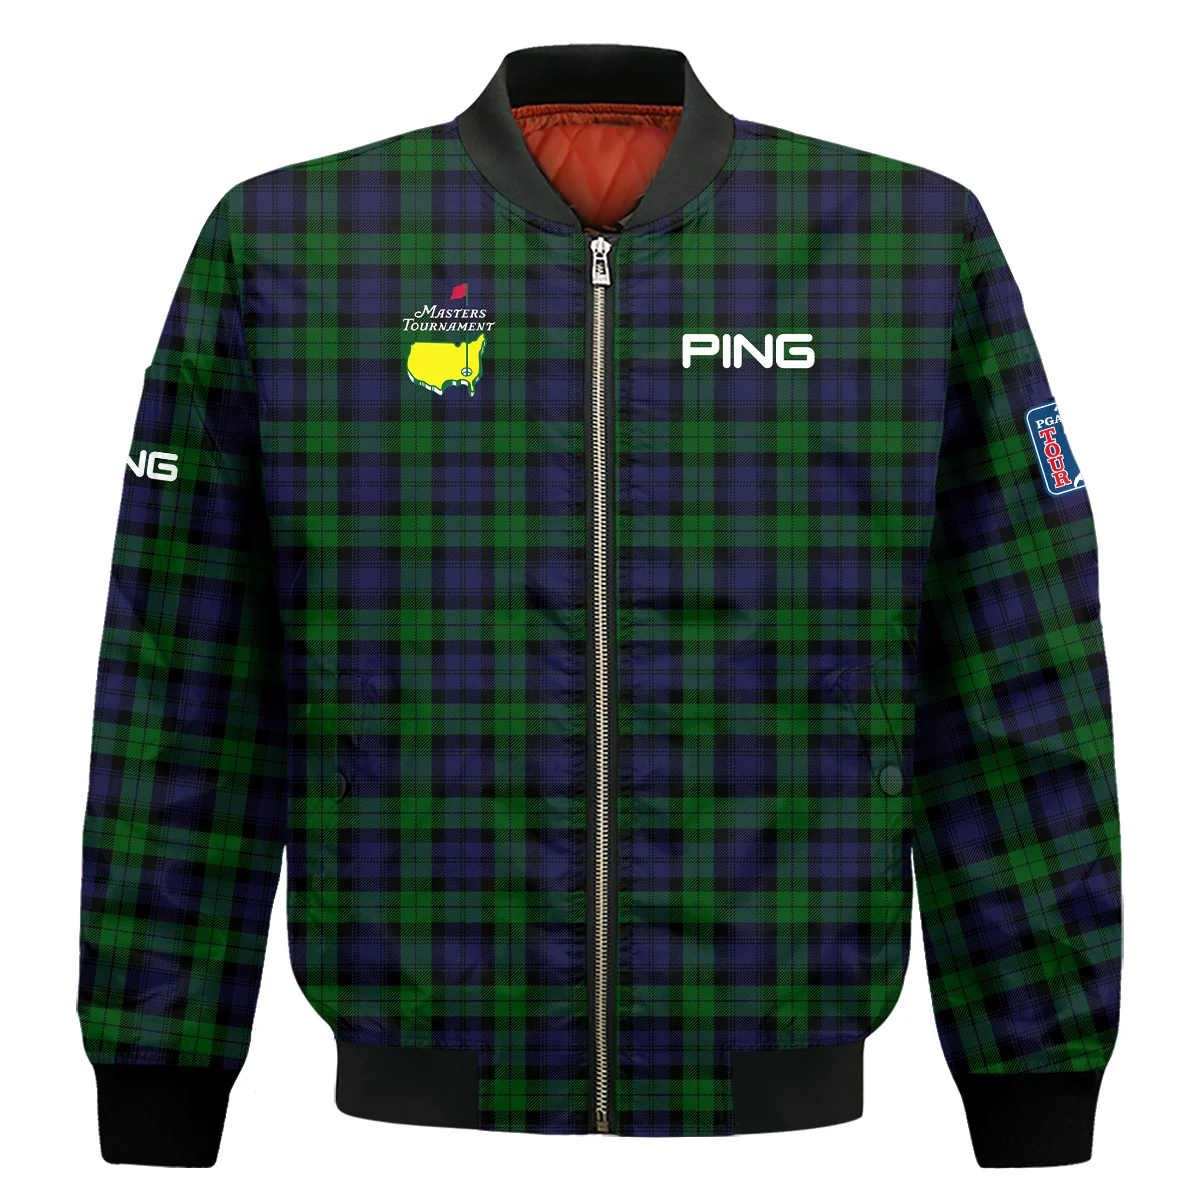 Masters Tournament Ping Golf Bomber Jacket Sports Green Purple Black Watch Tartan Plaid Bomber Jacket GBJ1377